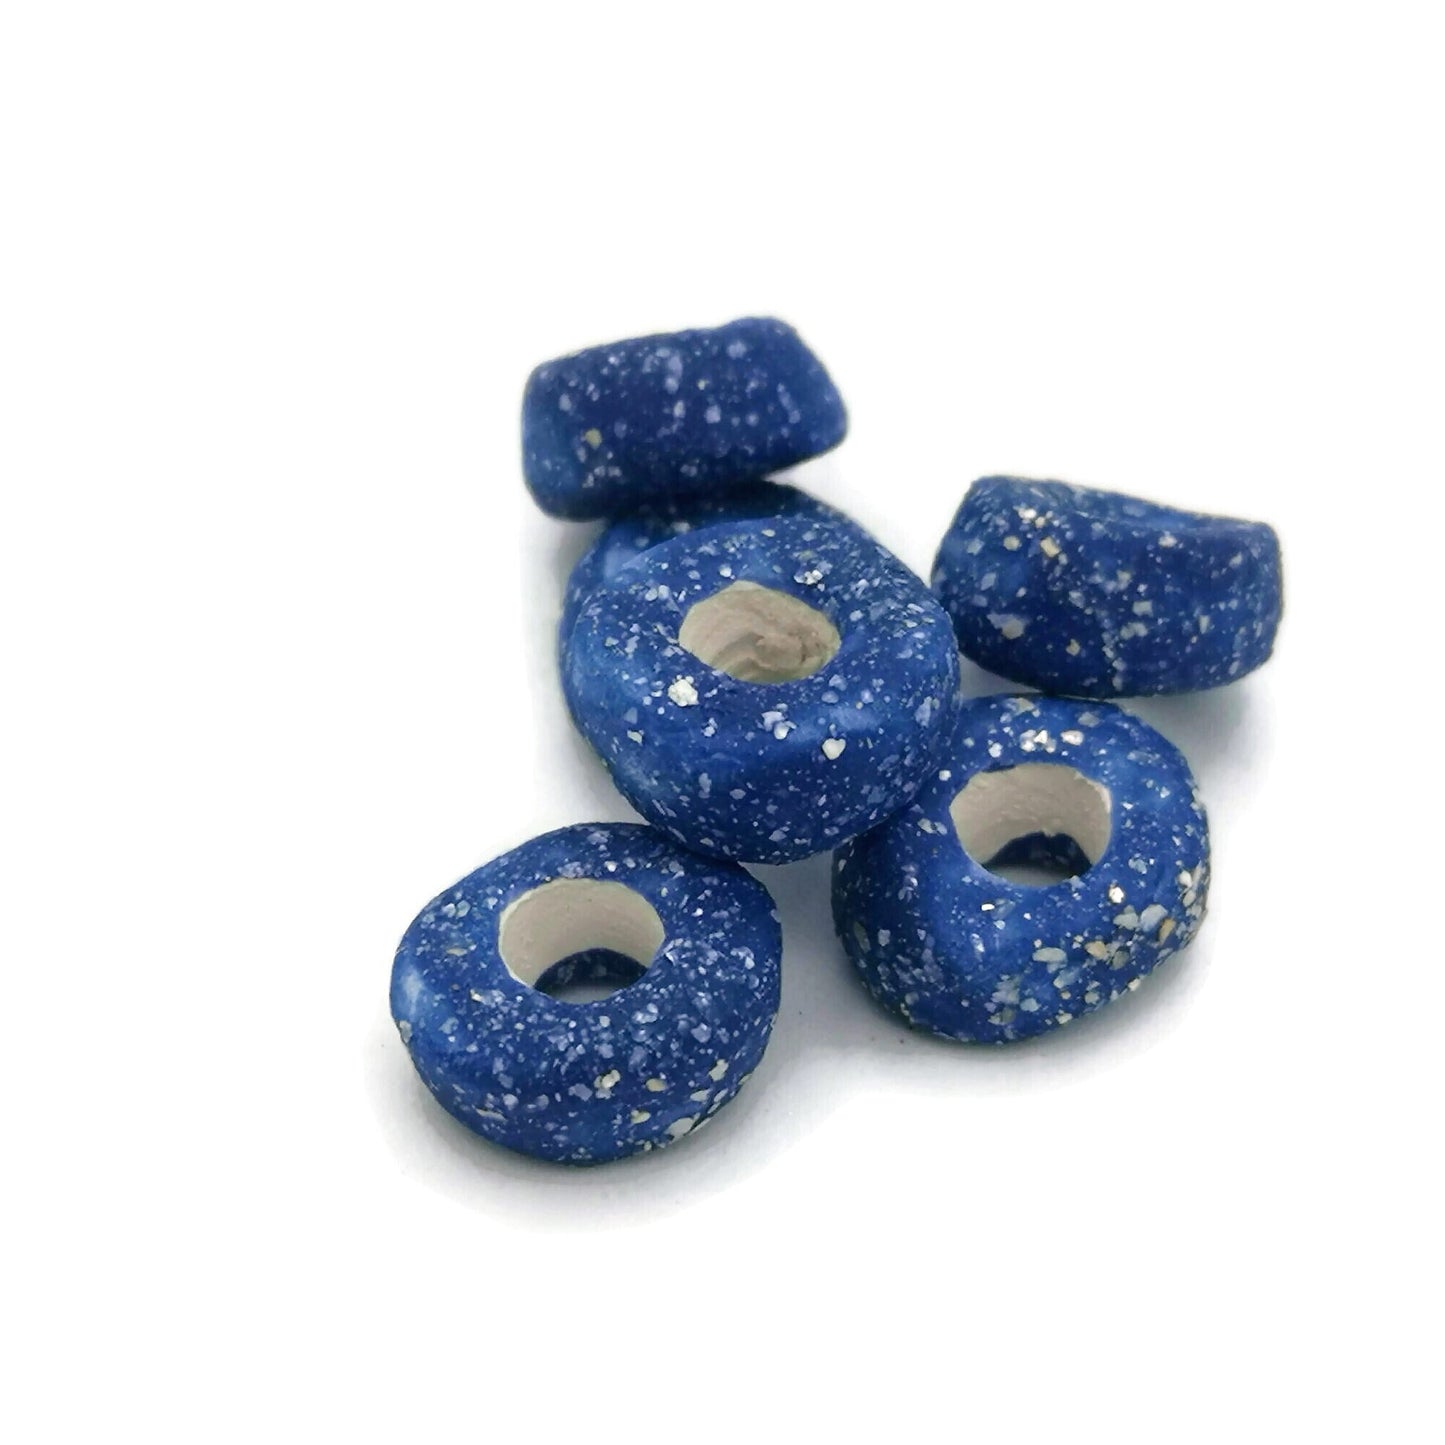 7 Pcs Clay Beads Large Hole, Handmade Ceramic Beads Jewelry Making, Porcelain Dreadlock Beads, Unique Donut Bead Unusual - Ceramica Ana Rafael